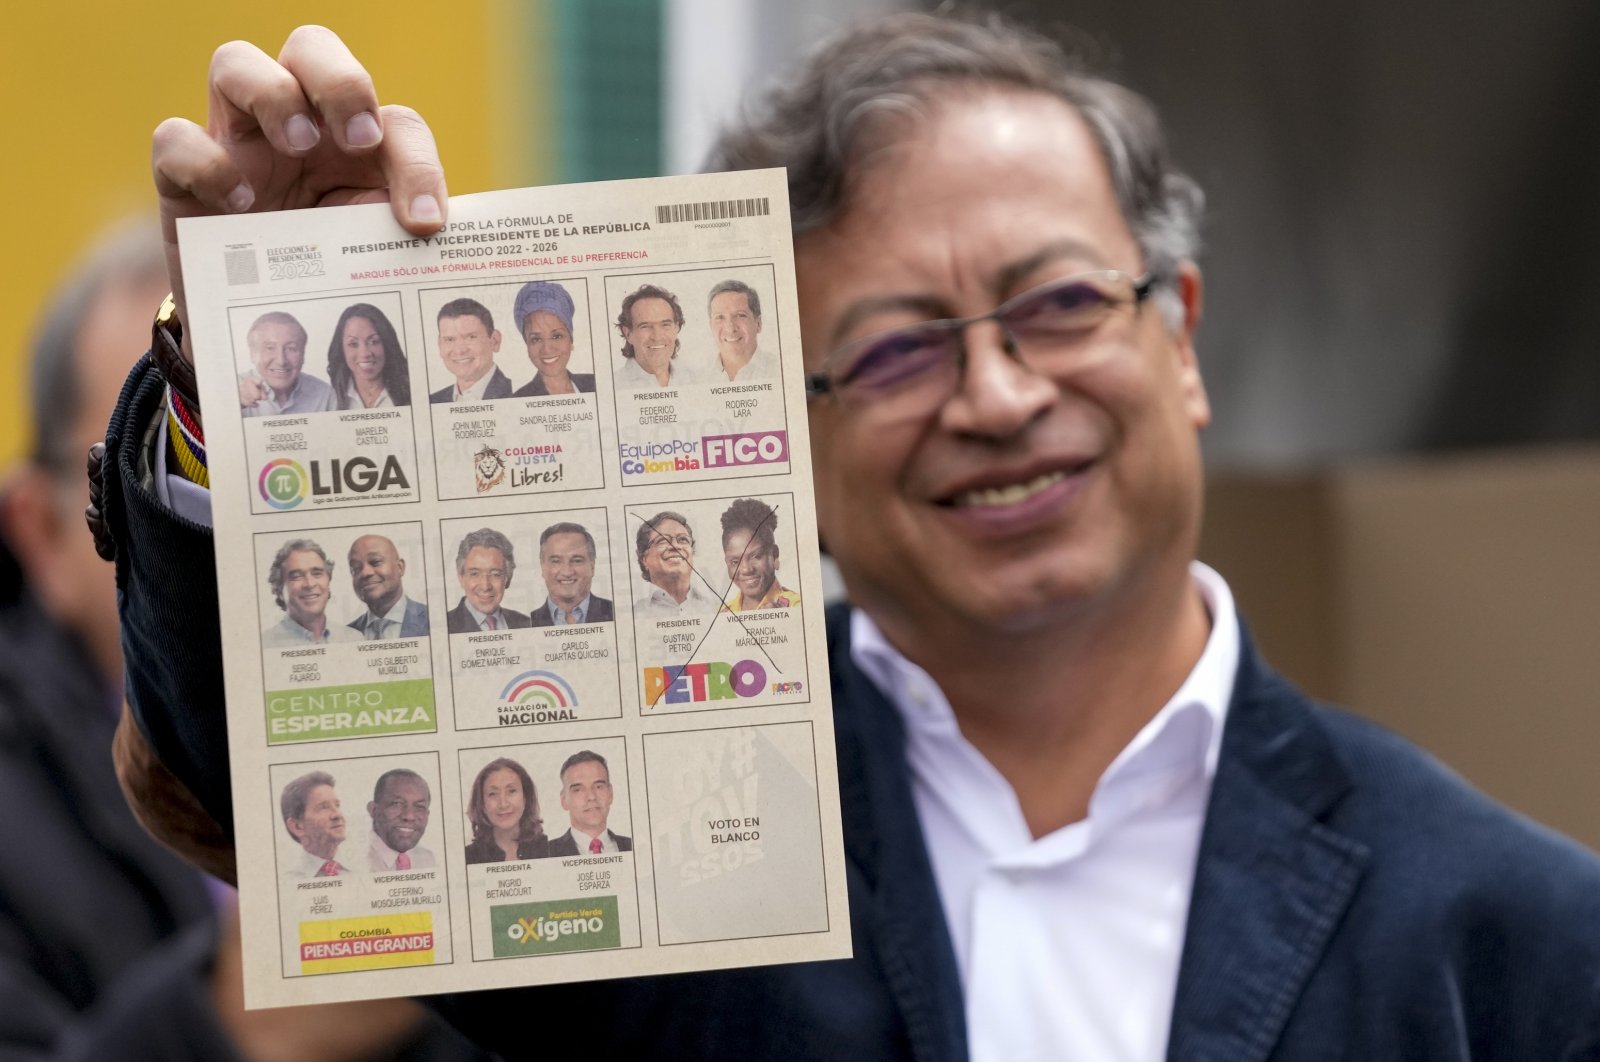 Mantan pemberontak memimpin jajak pendapat dalam pemilihan presiden Kolombia